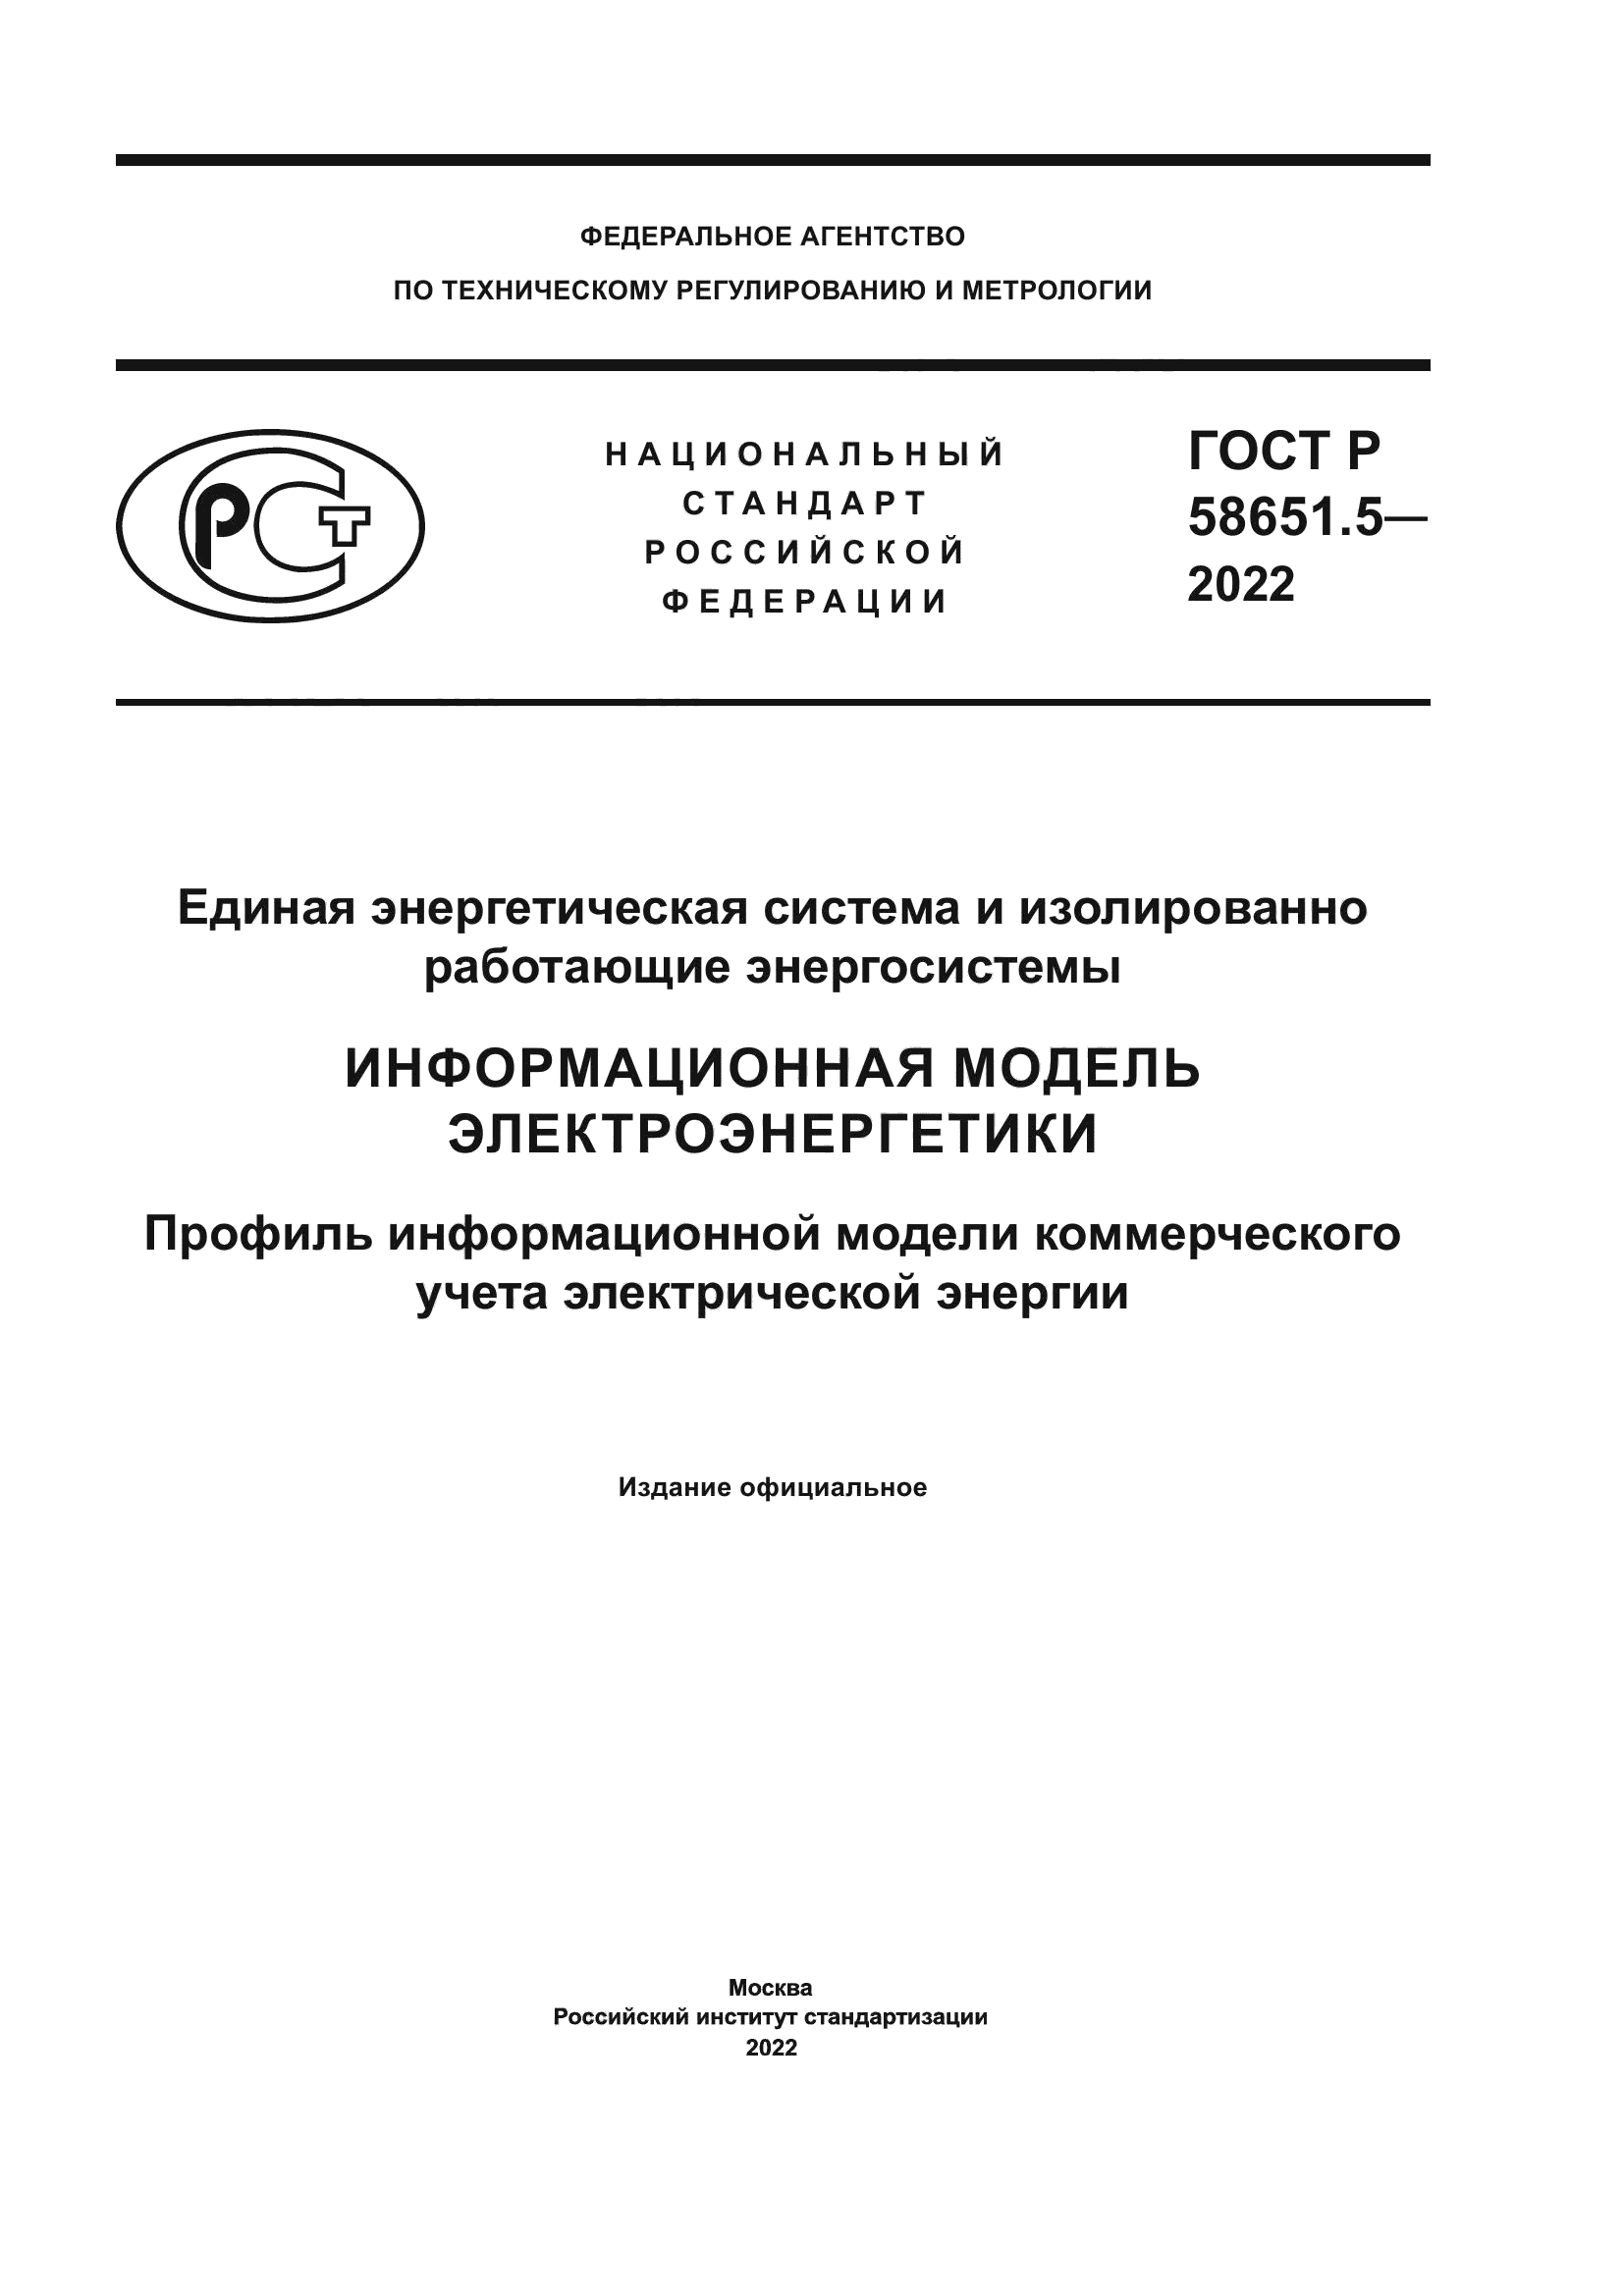 ГОСТ Р 58651.5-2022